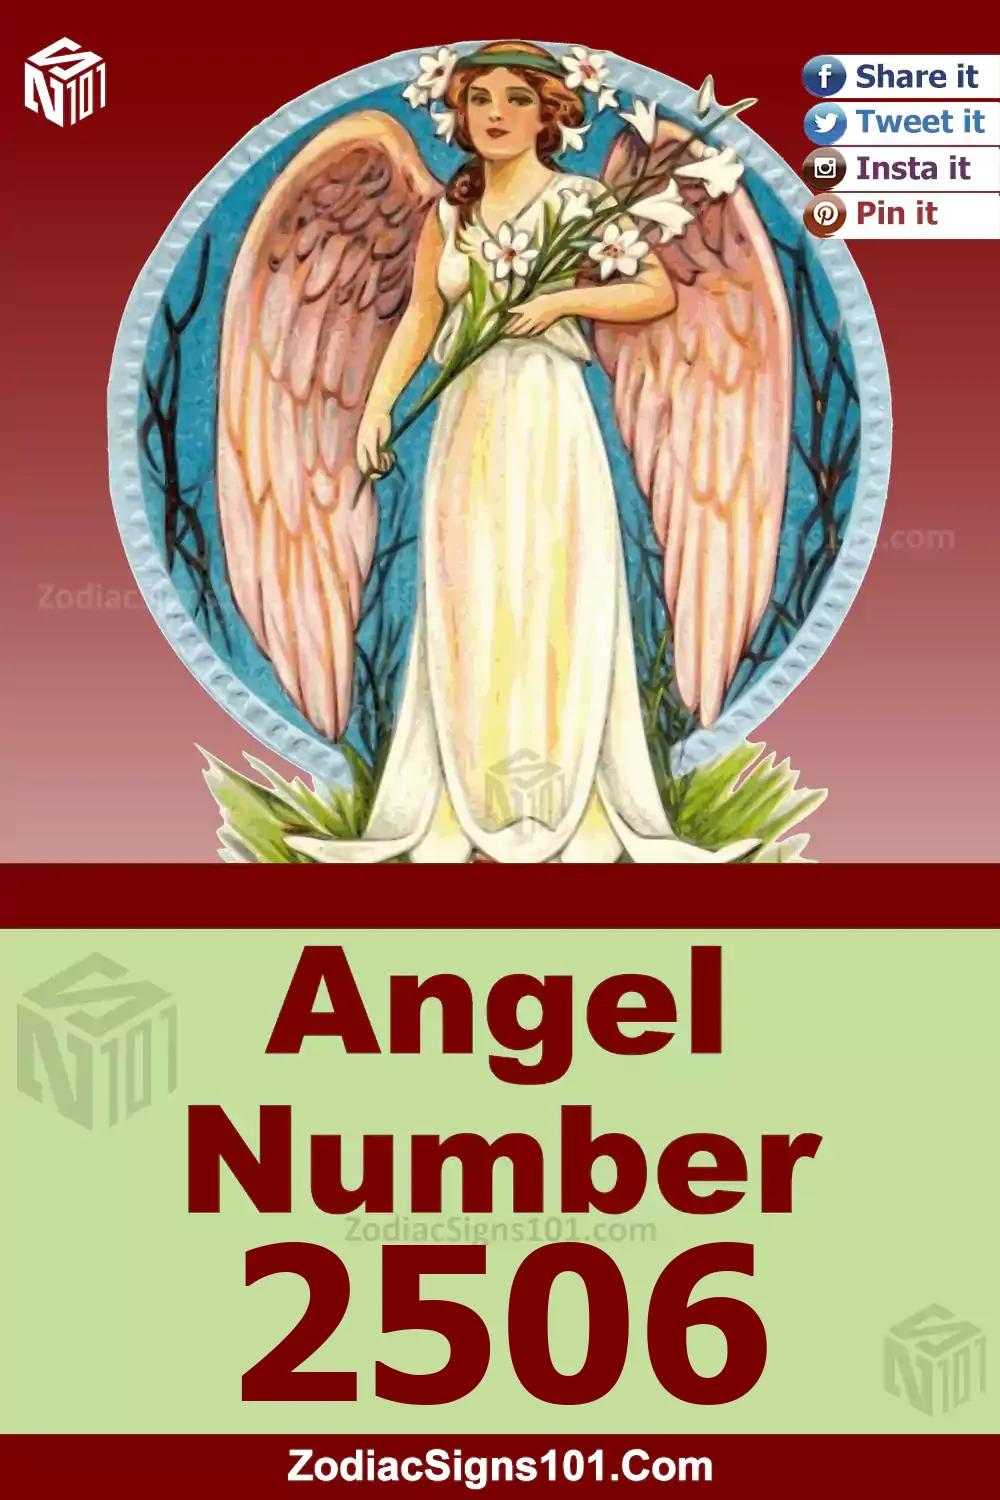 2506-Angel-Number-Meaning.jpg